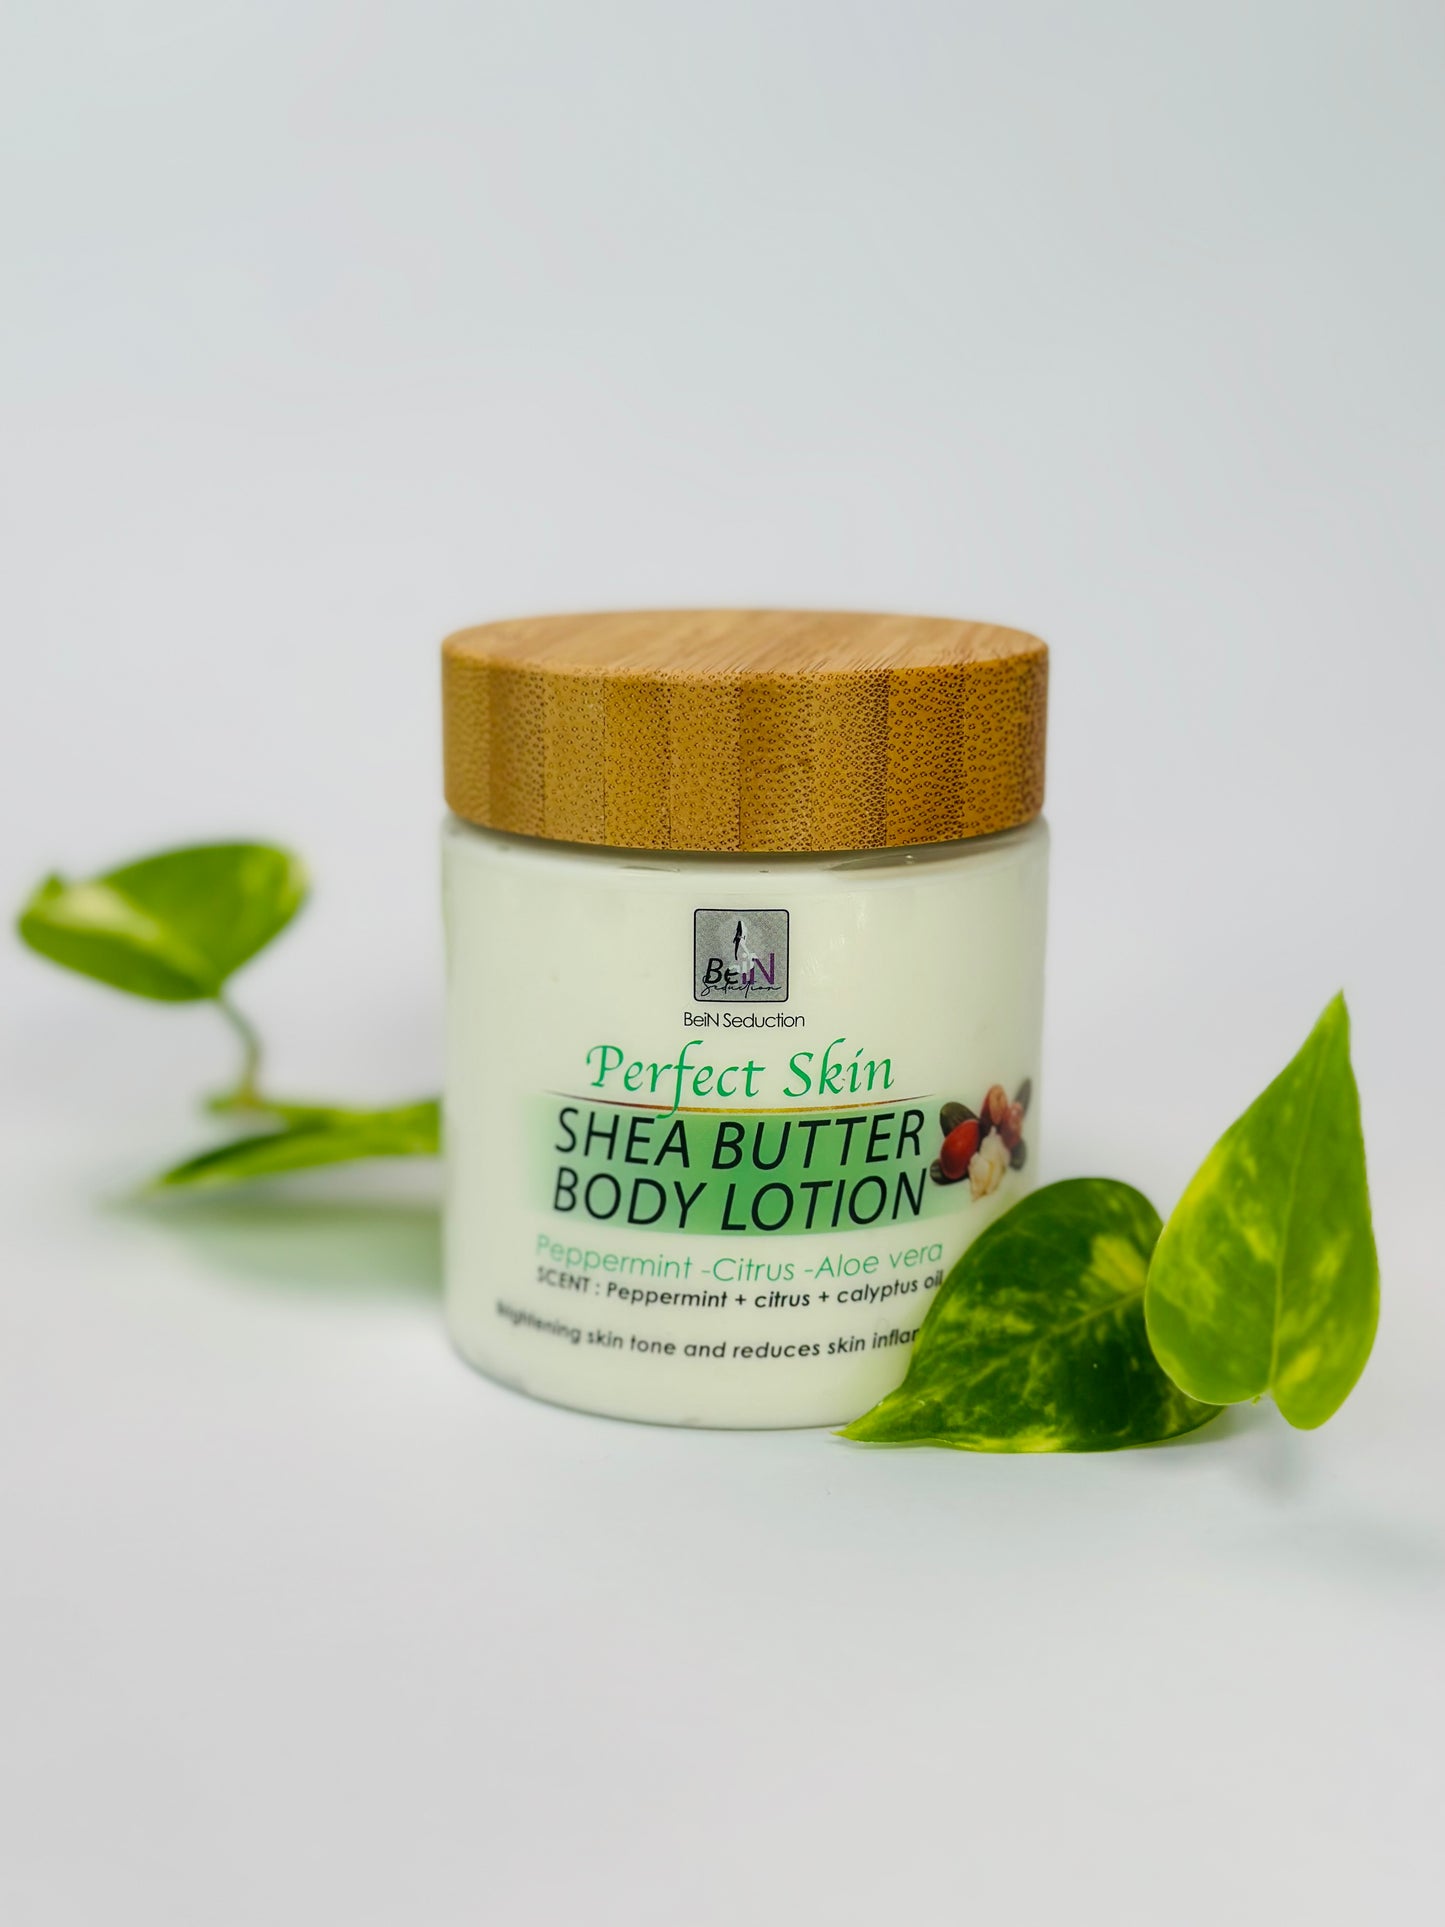 Perfect Skin Shea Butter Body Lotion Peppermint, Citrus, Aloe Vera